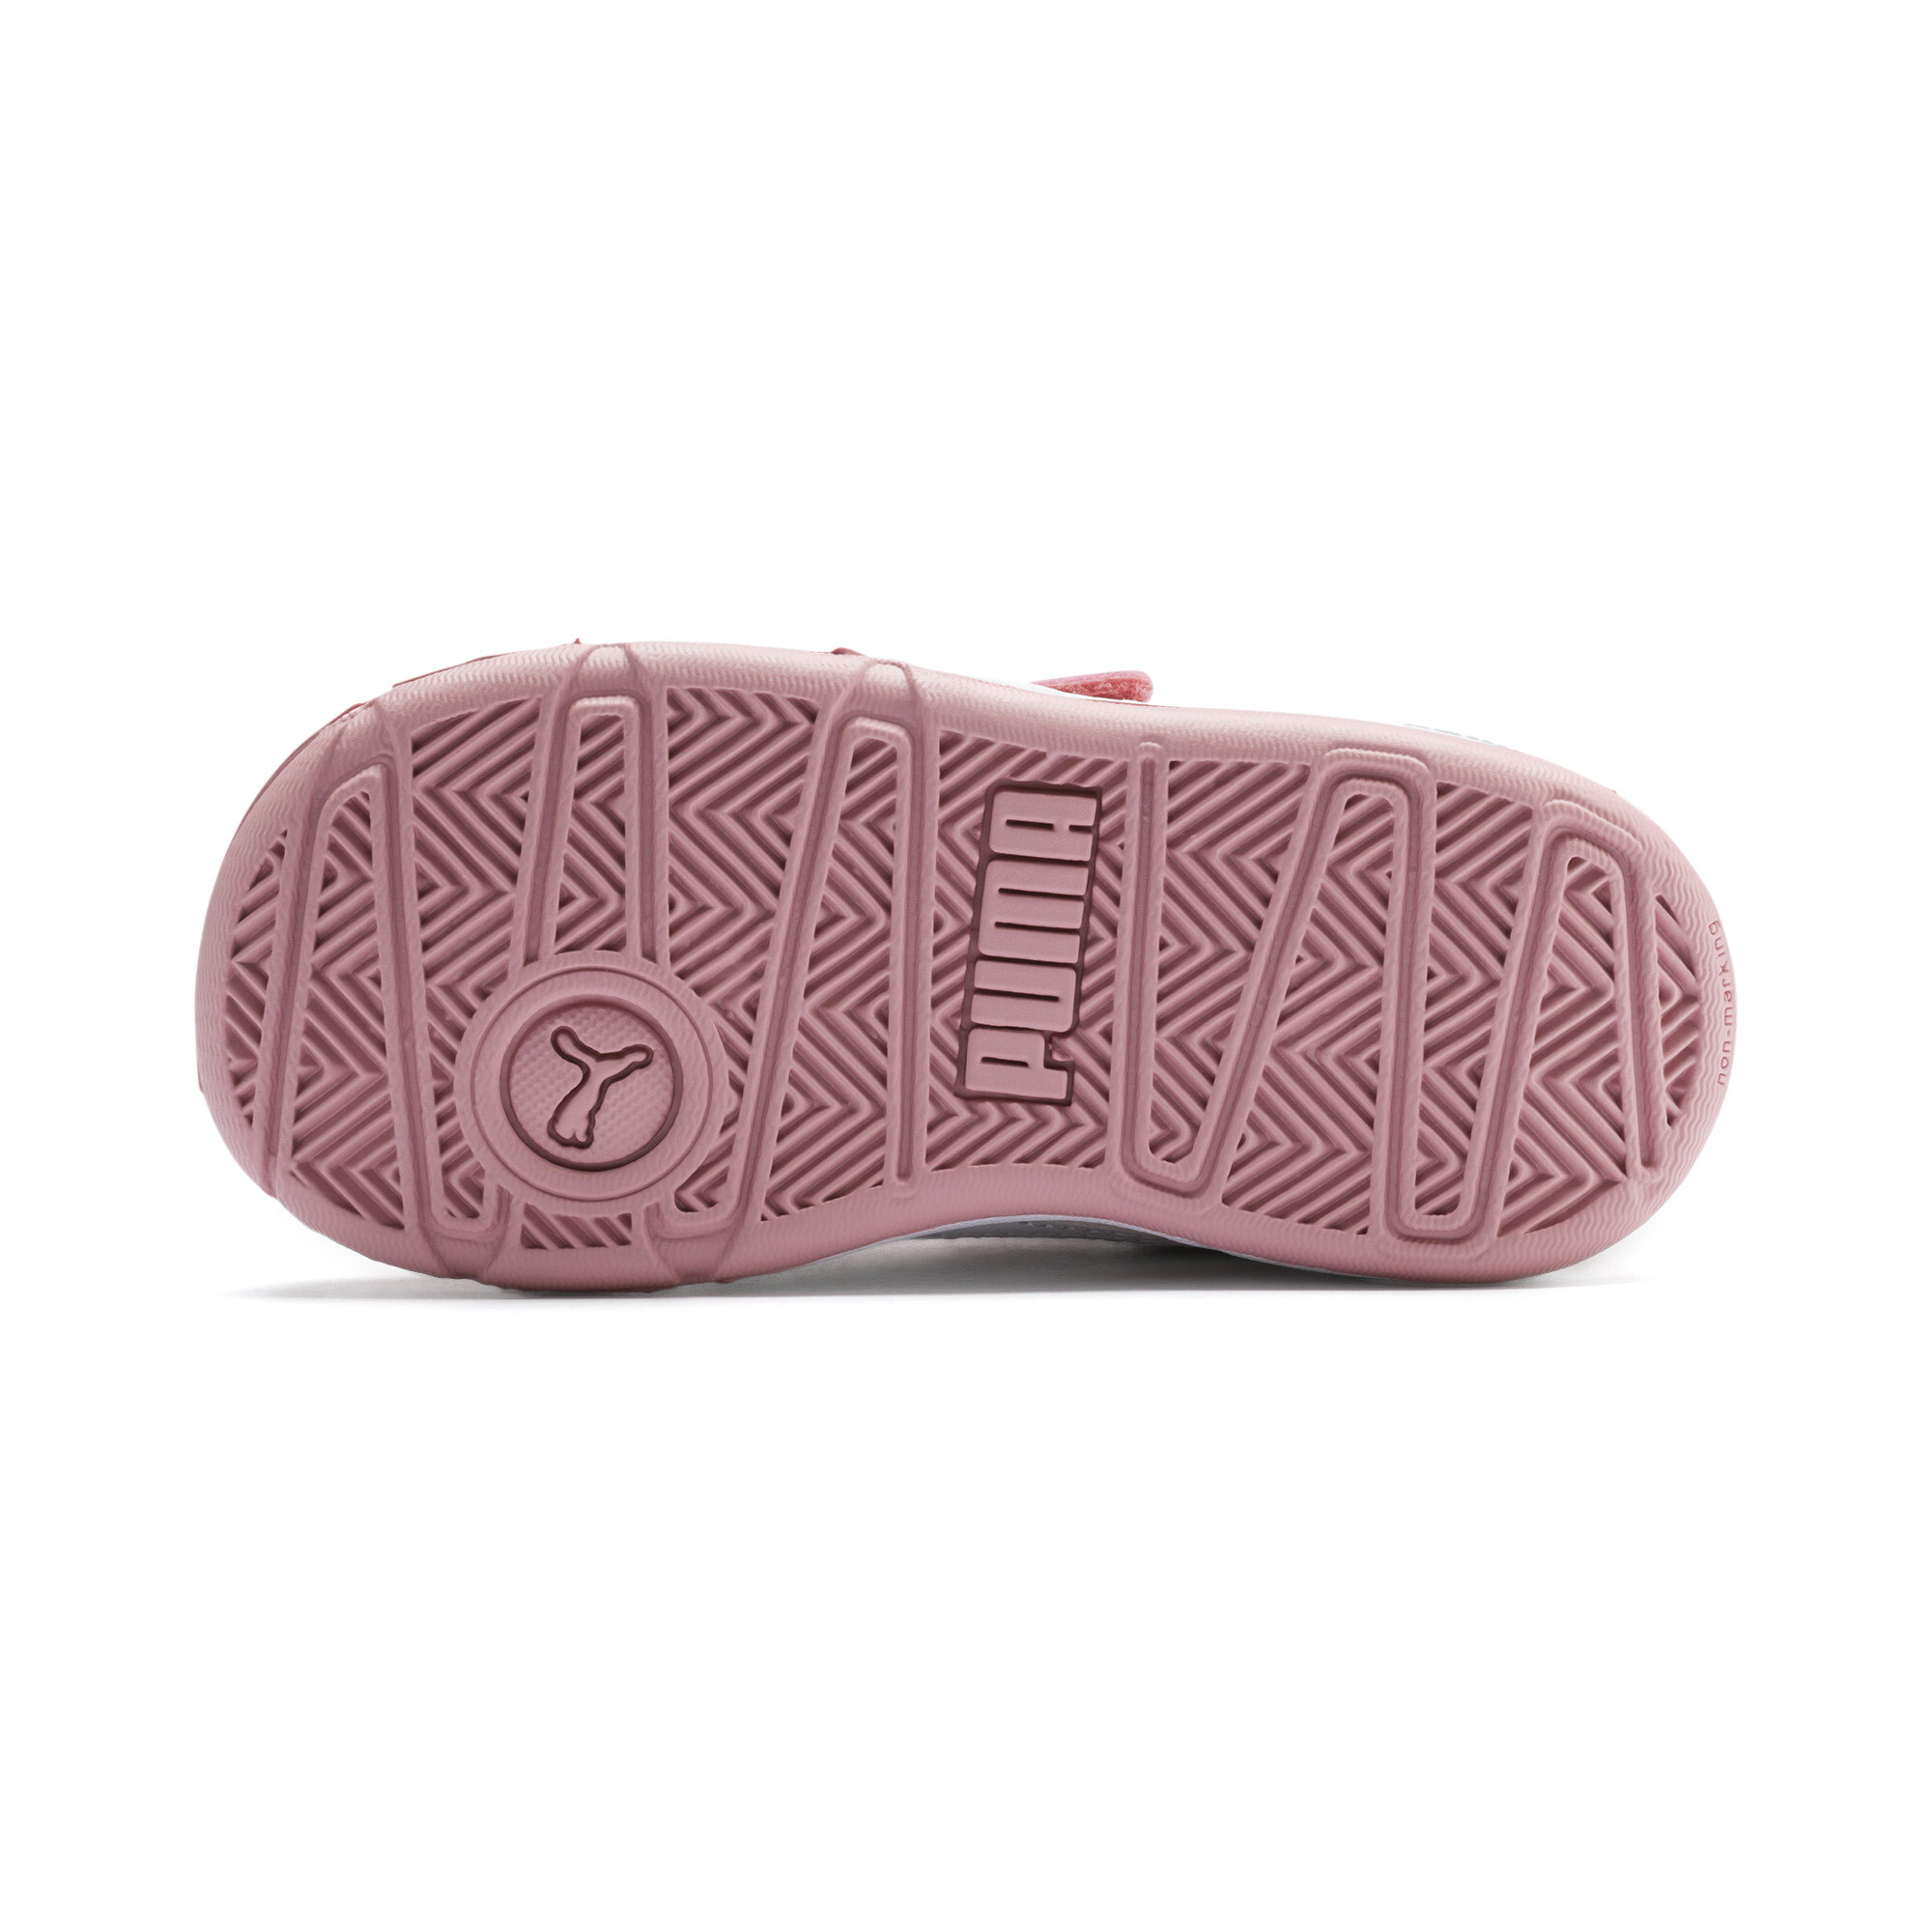 Puma Stepfleex 2 SL VE V Babies' Trainers, Pink, Size 20, Shoes